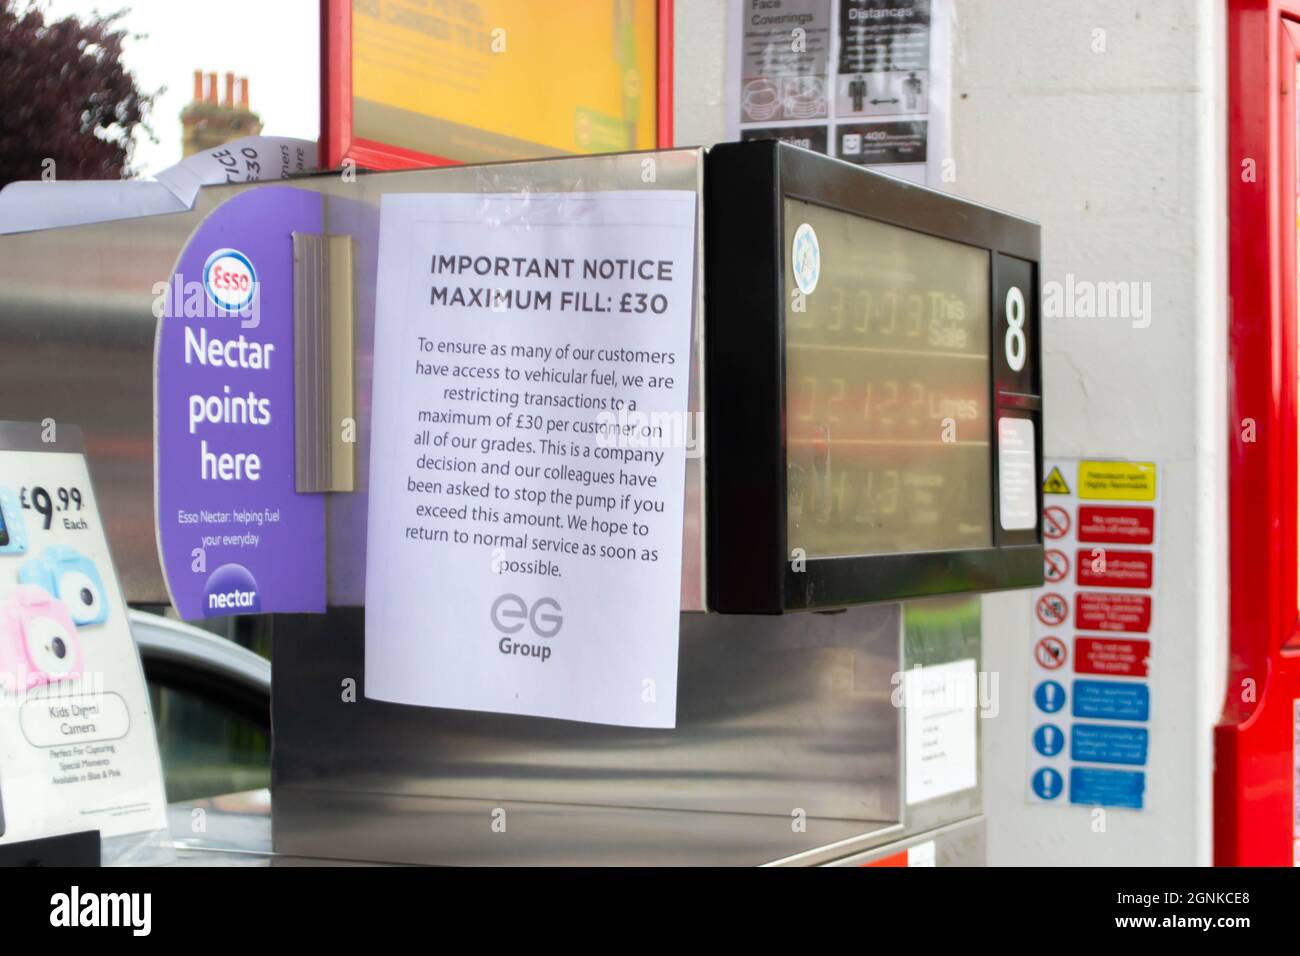 DENHAM, ENGLAND - 25 September 2021: Esso petrol station limiting purchases to £30 amid fuel shortage crisis Stock Photo